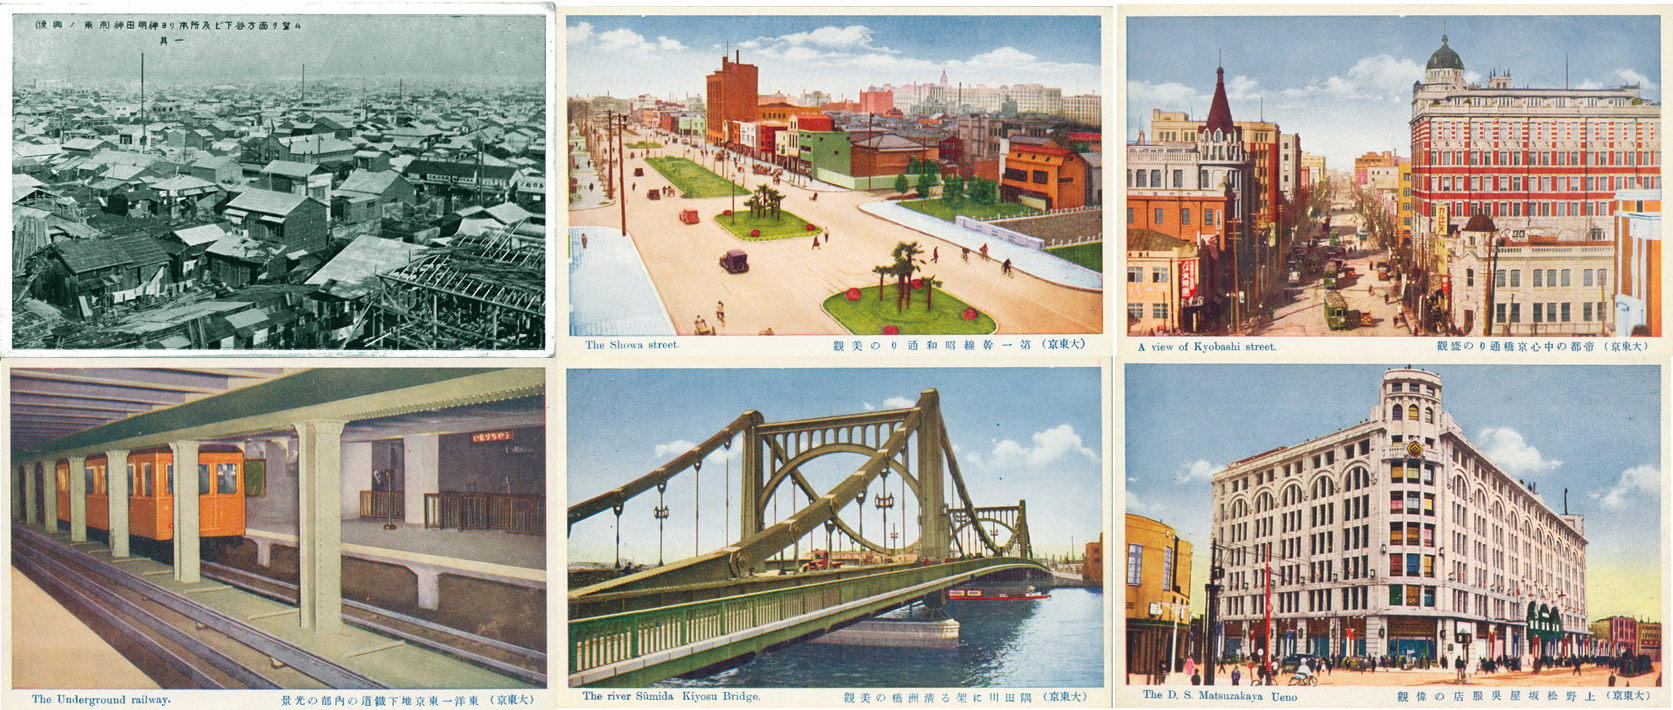 Postcards highlighting reconstruction accomplishments